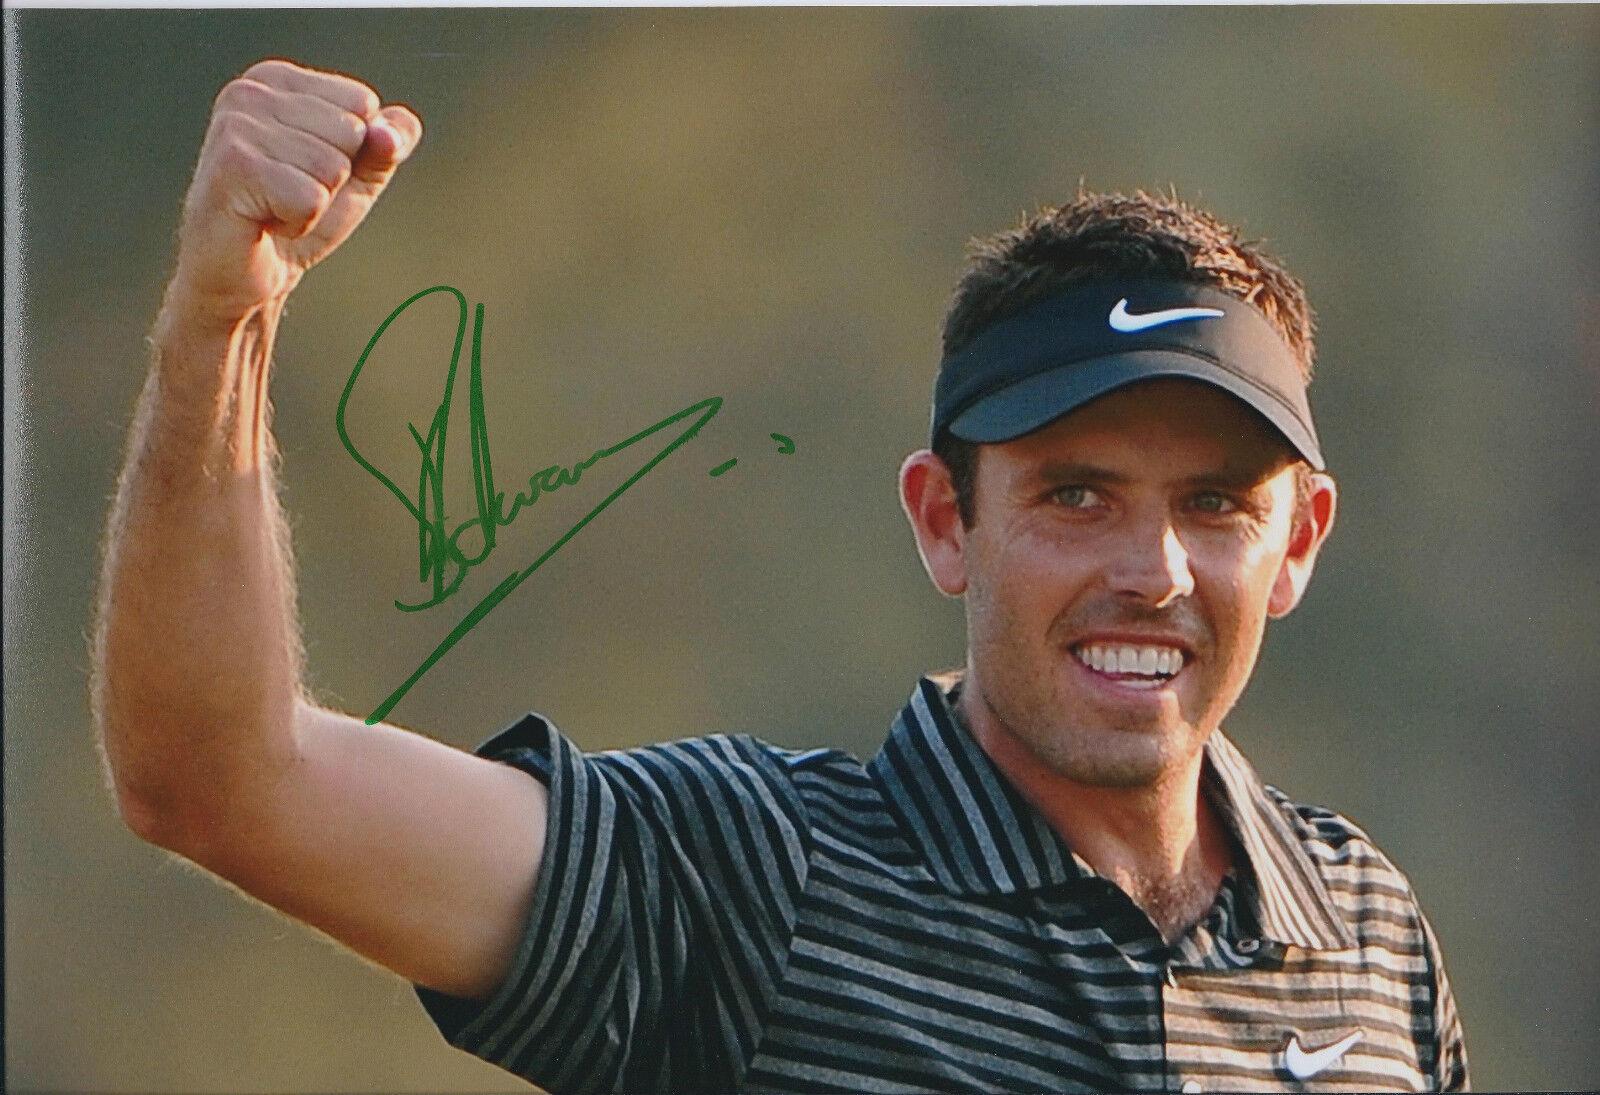 Charl Schwartzel SIGNED 12x8 Photo Poster painting AFTAL Masters Winner US PGA Golf GENUINE